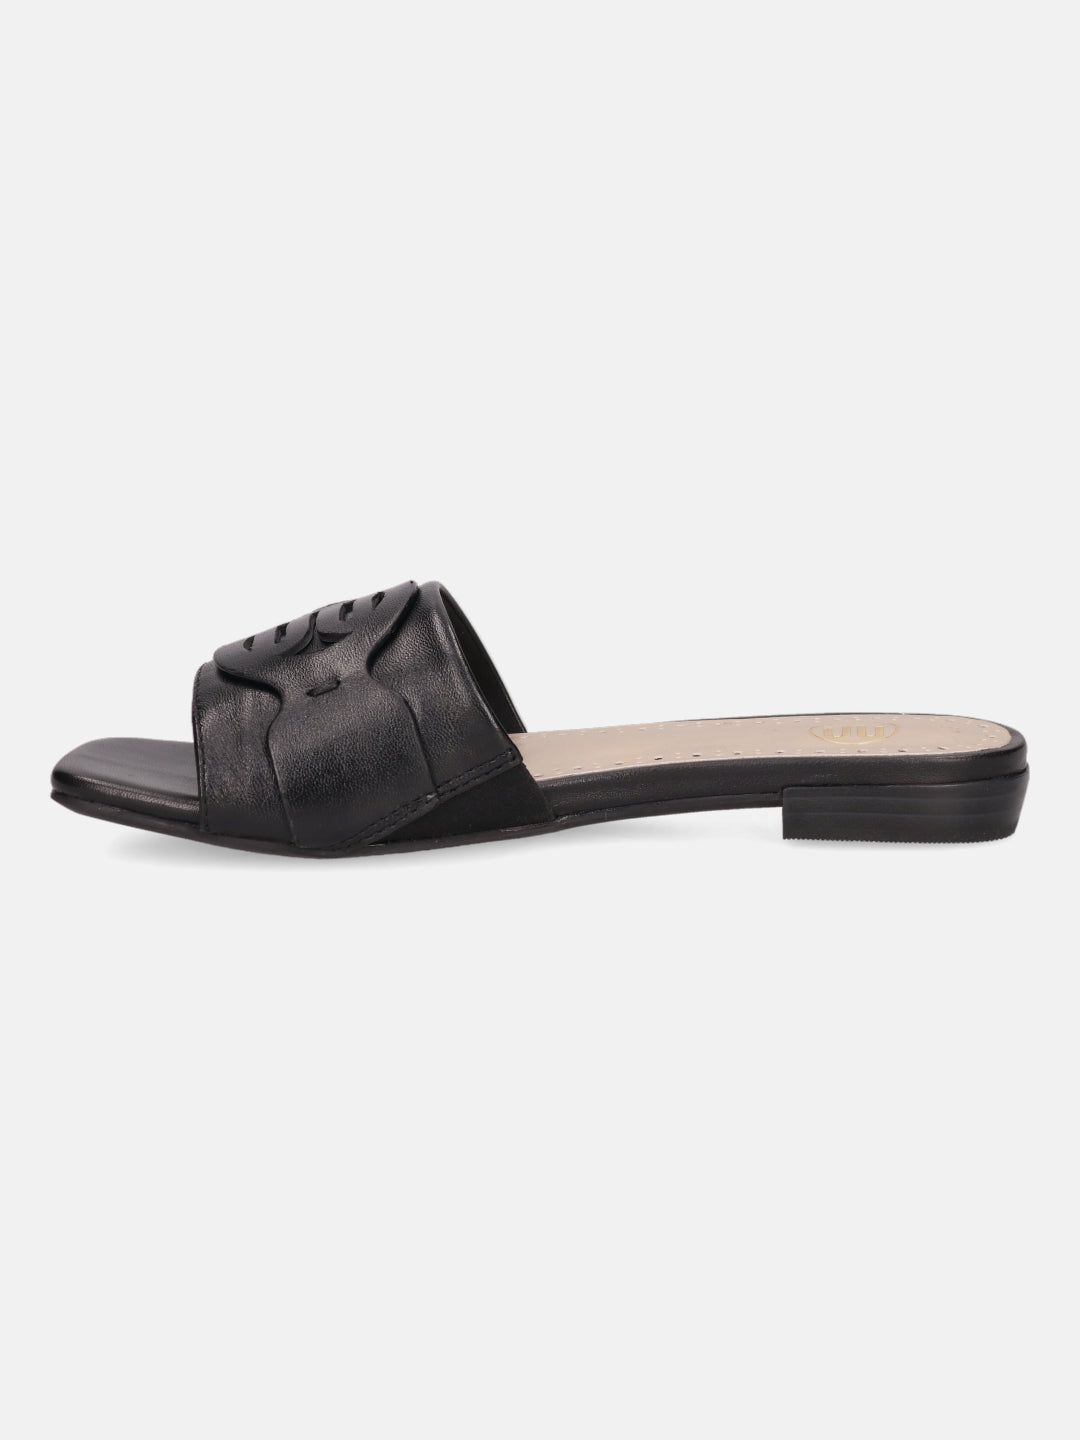 Mala Black Leather Sandals